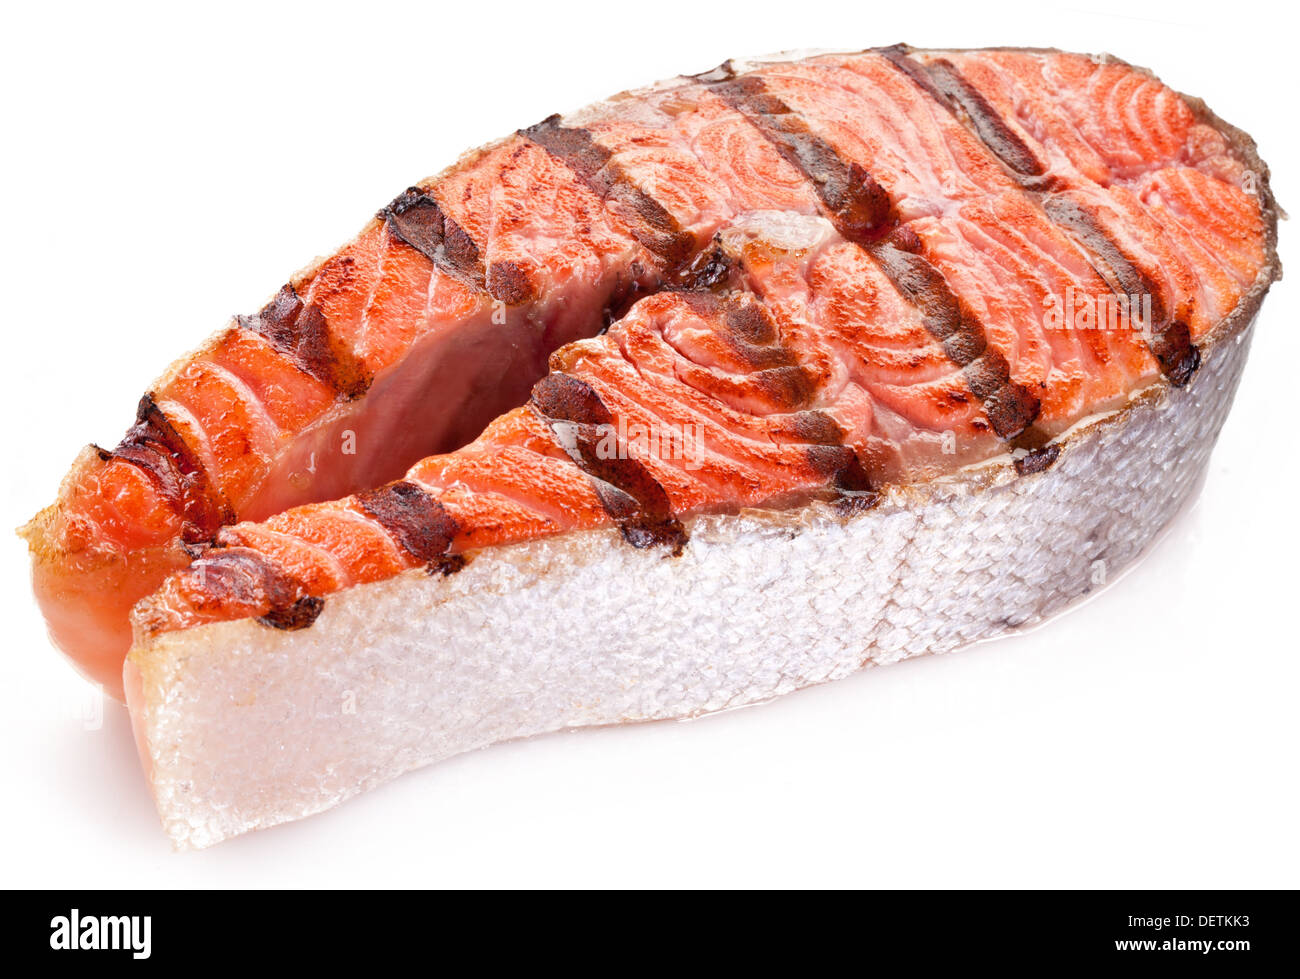 Gran filete de salmón grillado. Primer plano. Foto de stock